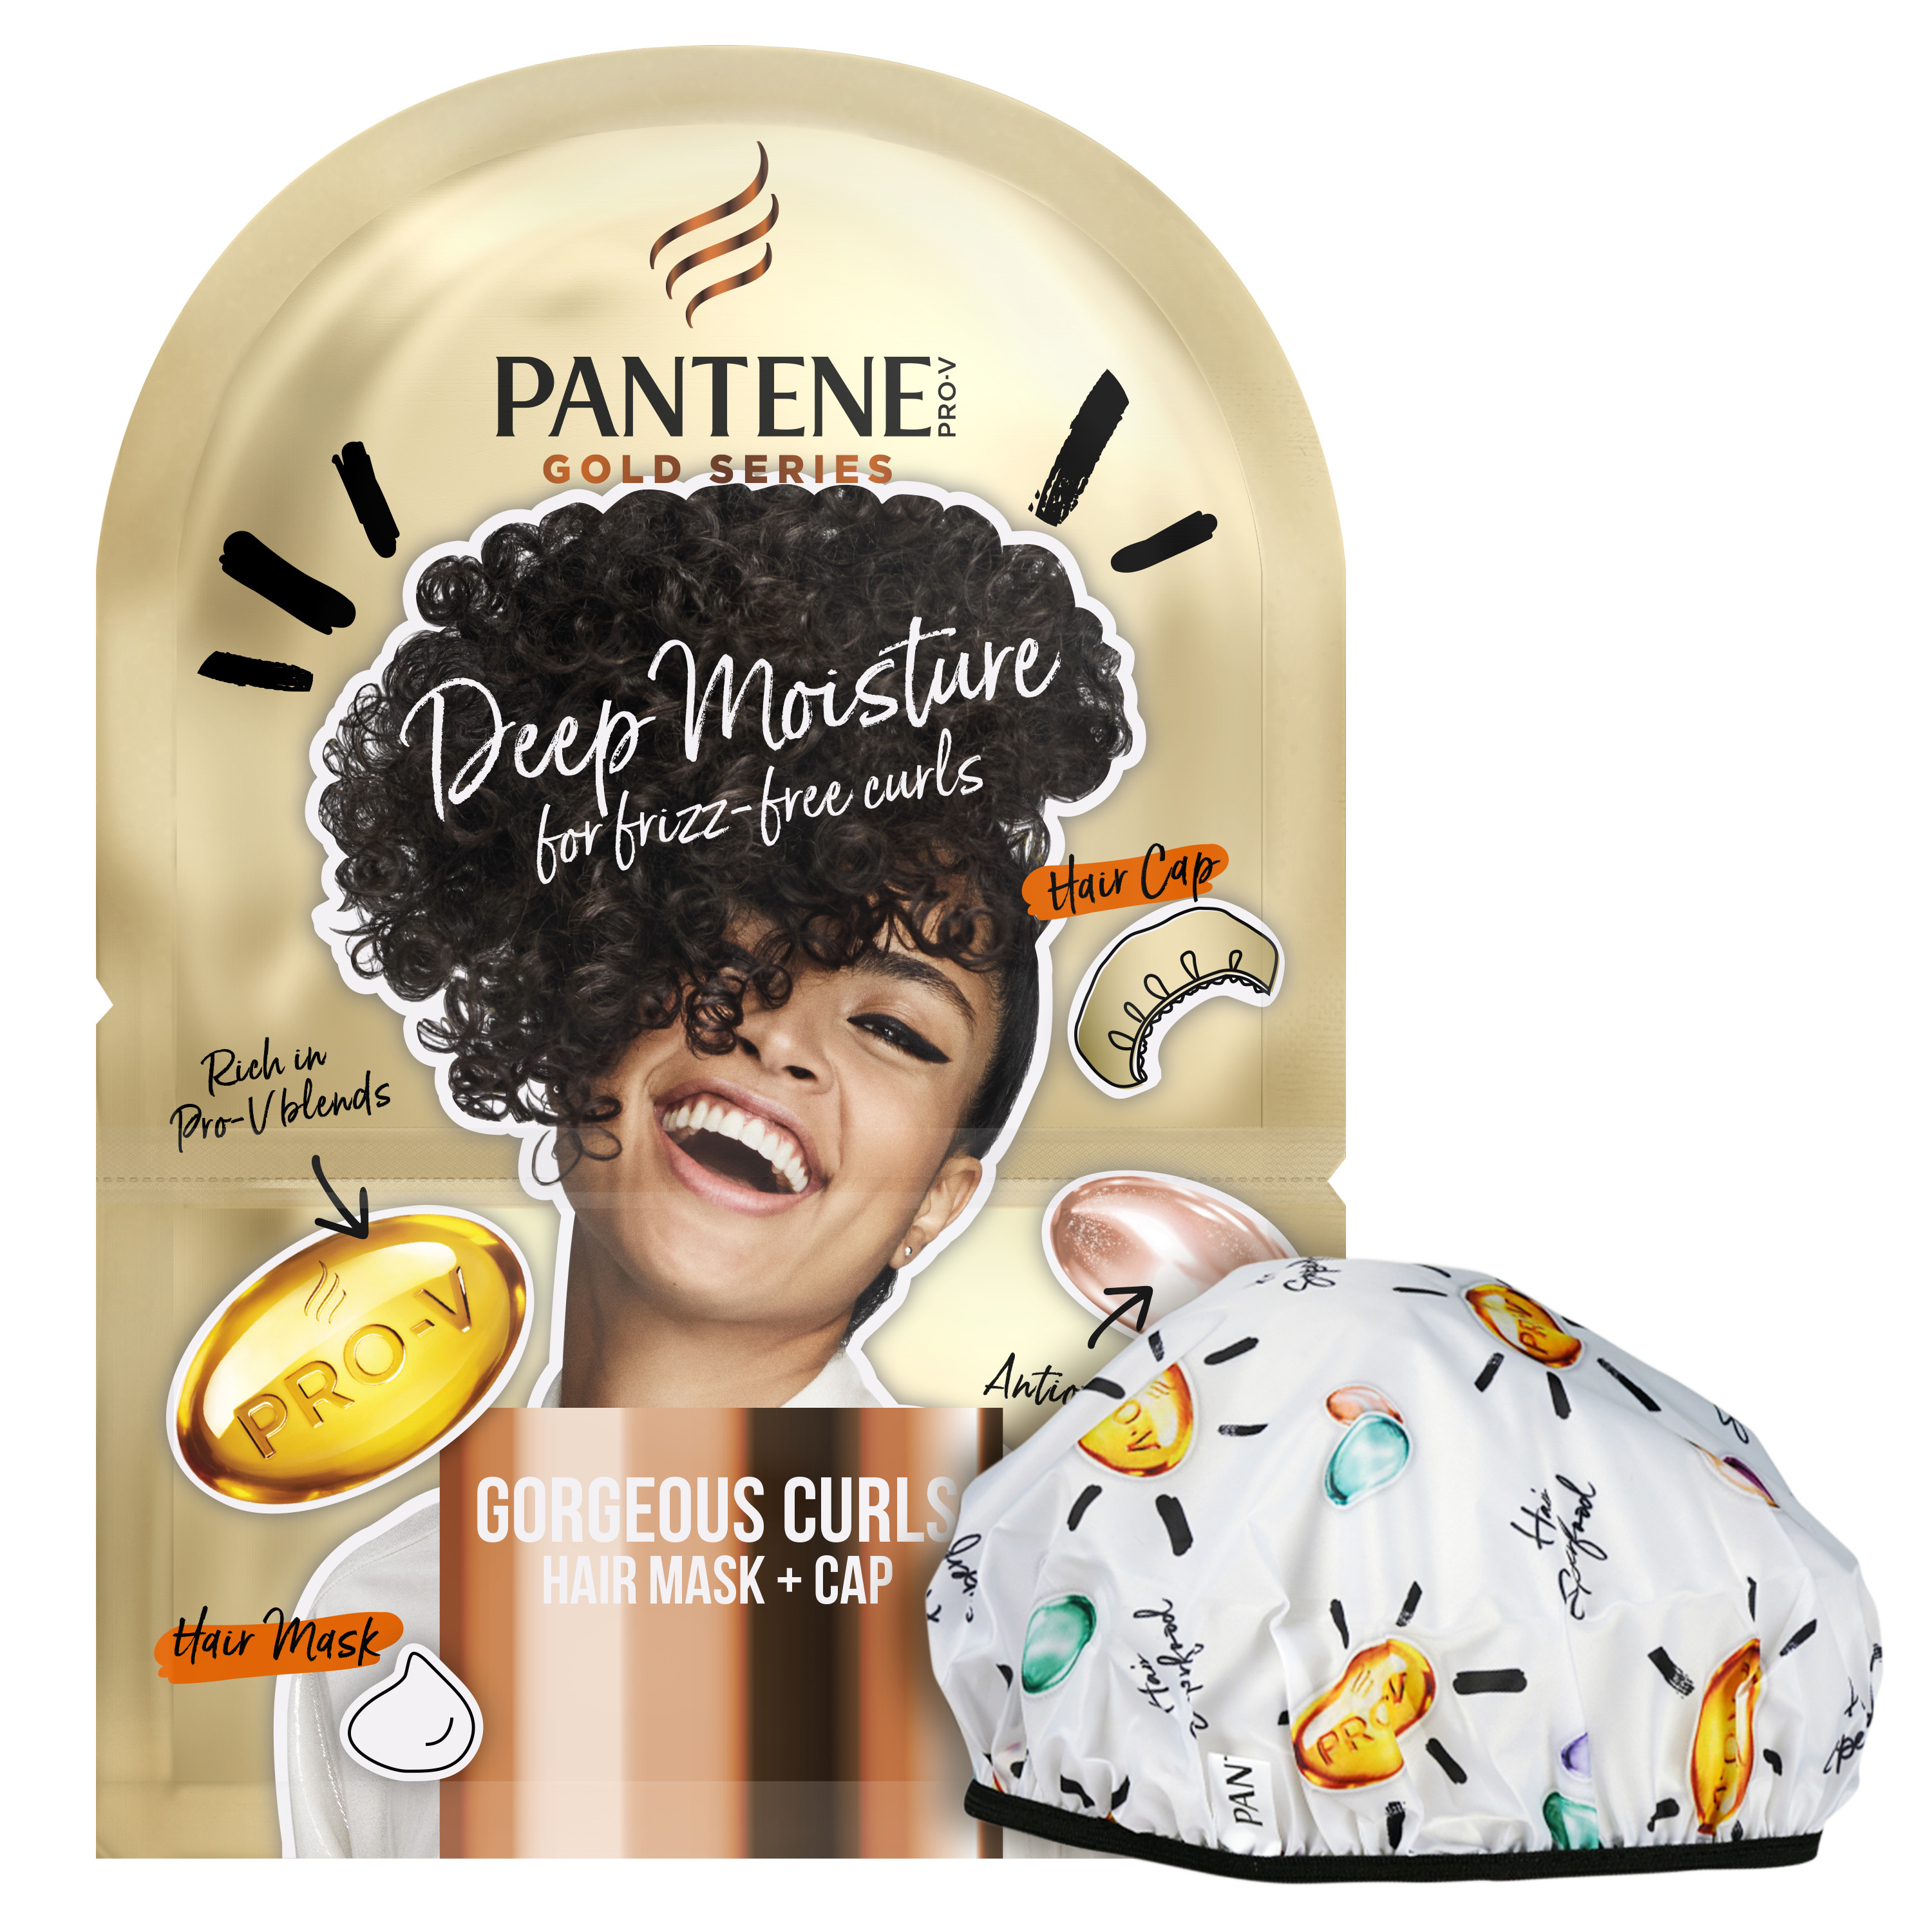 Pantene Deep Moisture Hair Mask For Frizz-free Curls